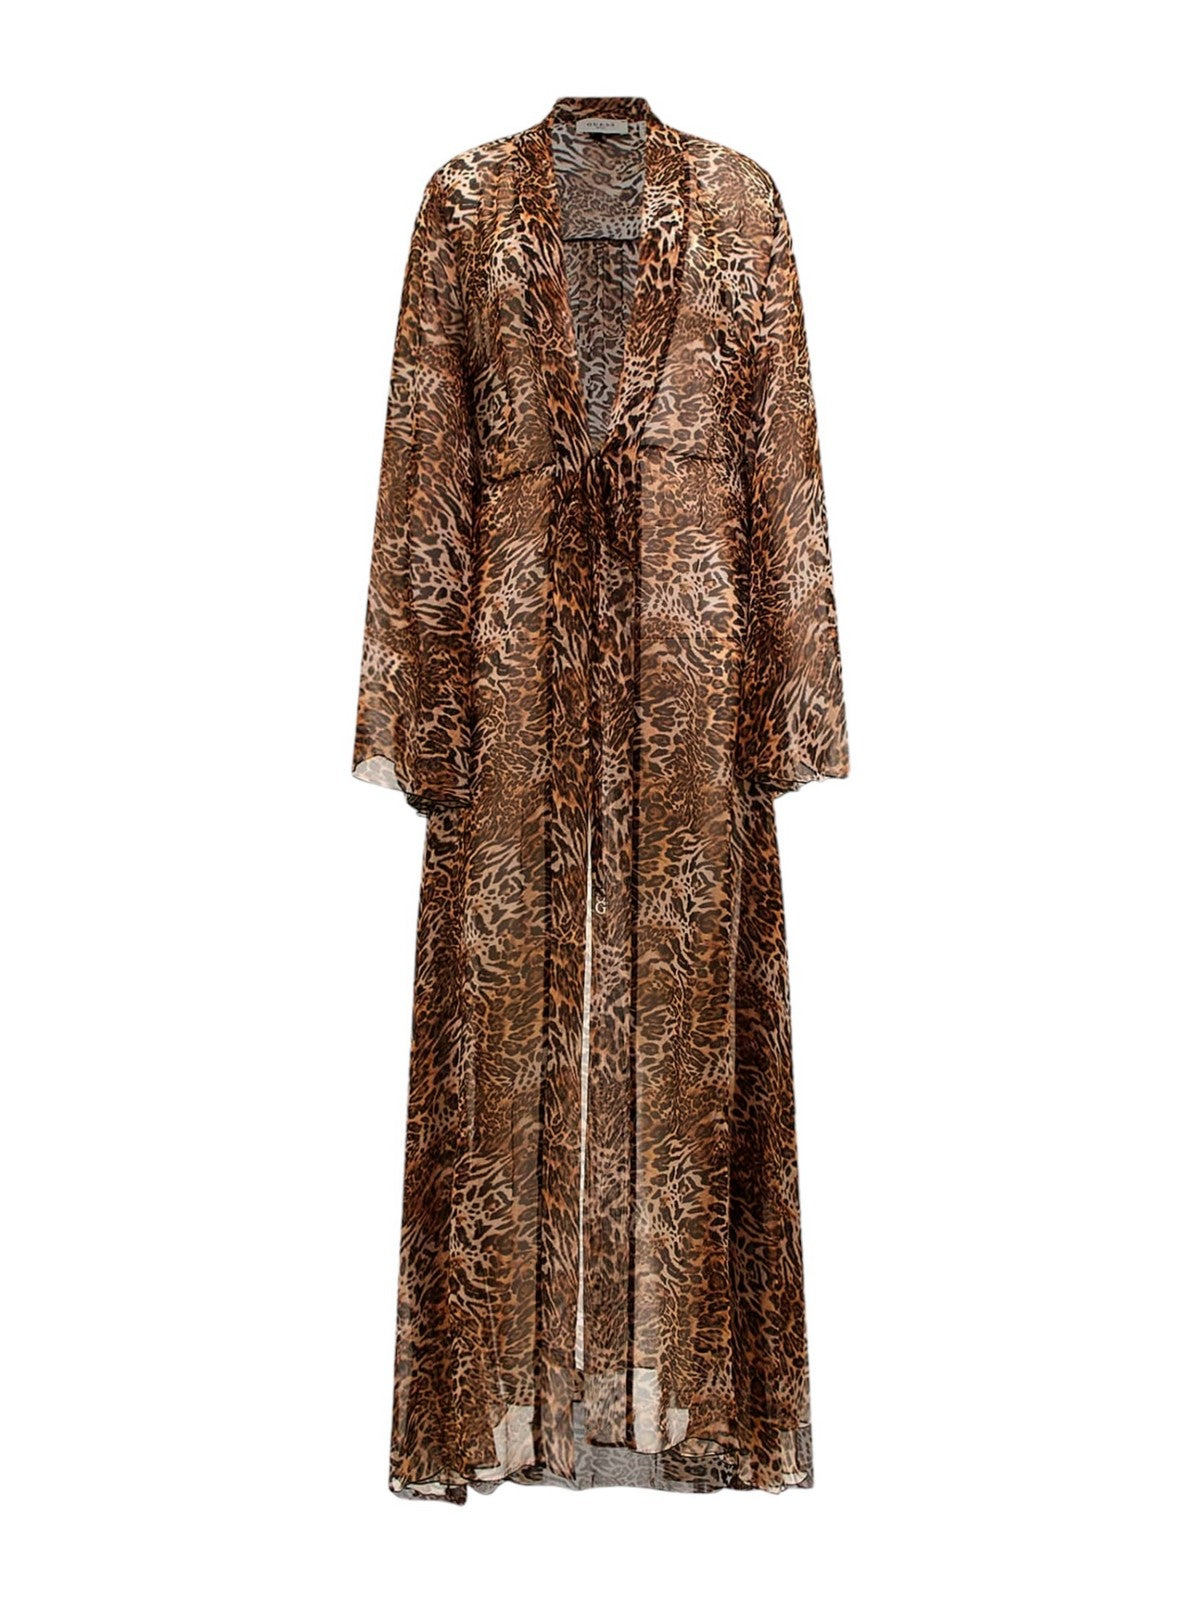 GUESS BEACHWEAR Robe kimono longue pour femme E4GK03 WE550 P122 Beige